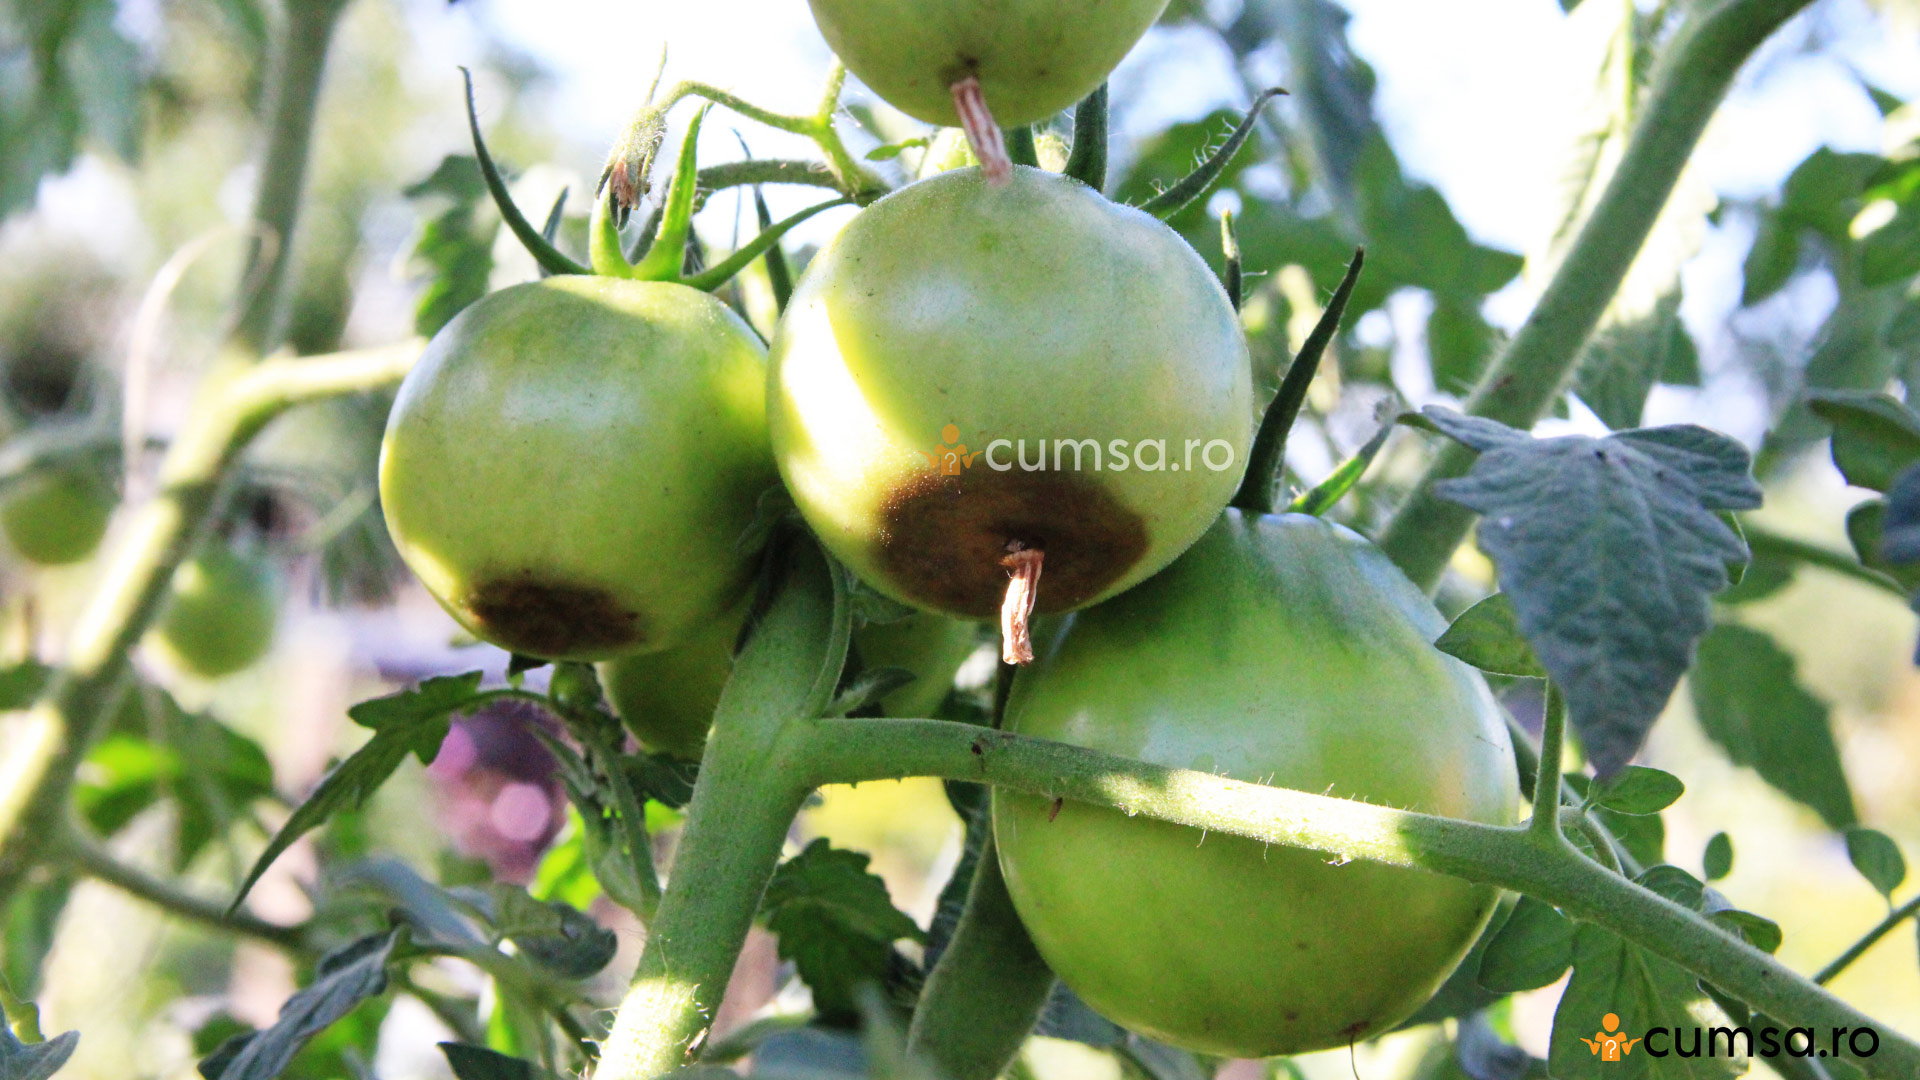 according to tribe Settle Carenta de calciu la tomate. Cum sa combati aceasta boala la rosii -  cumsa.ro